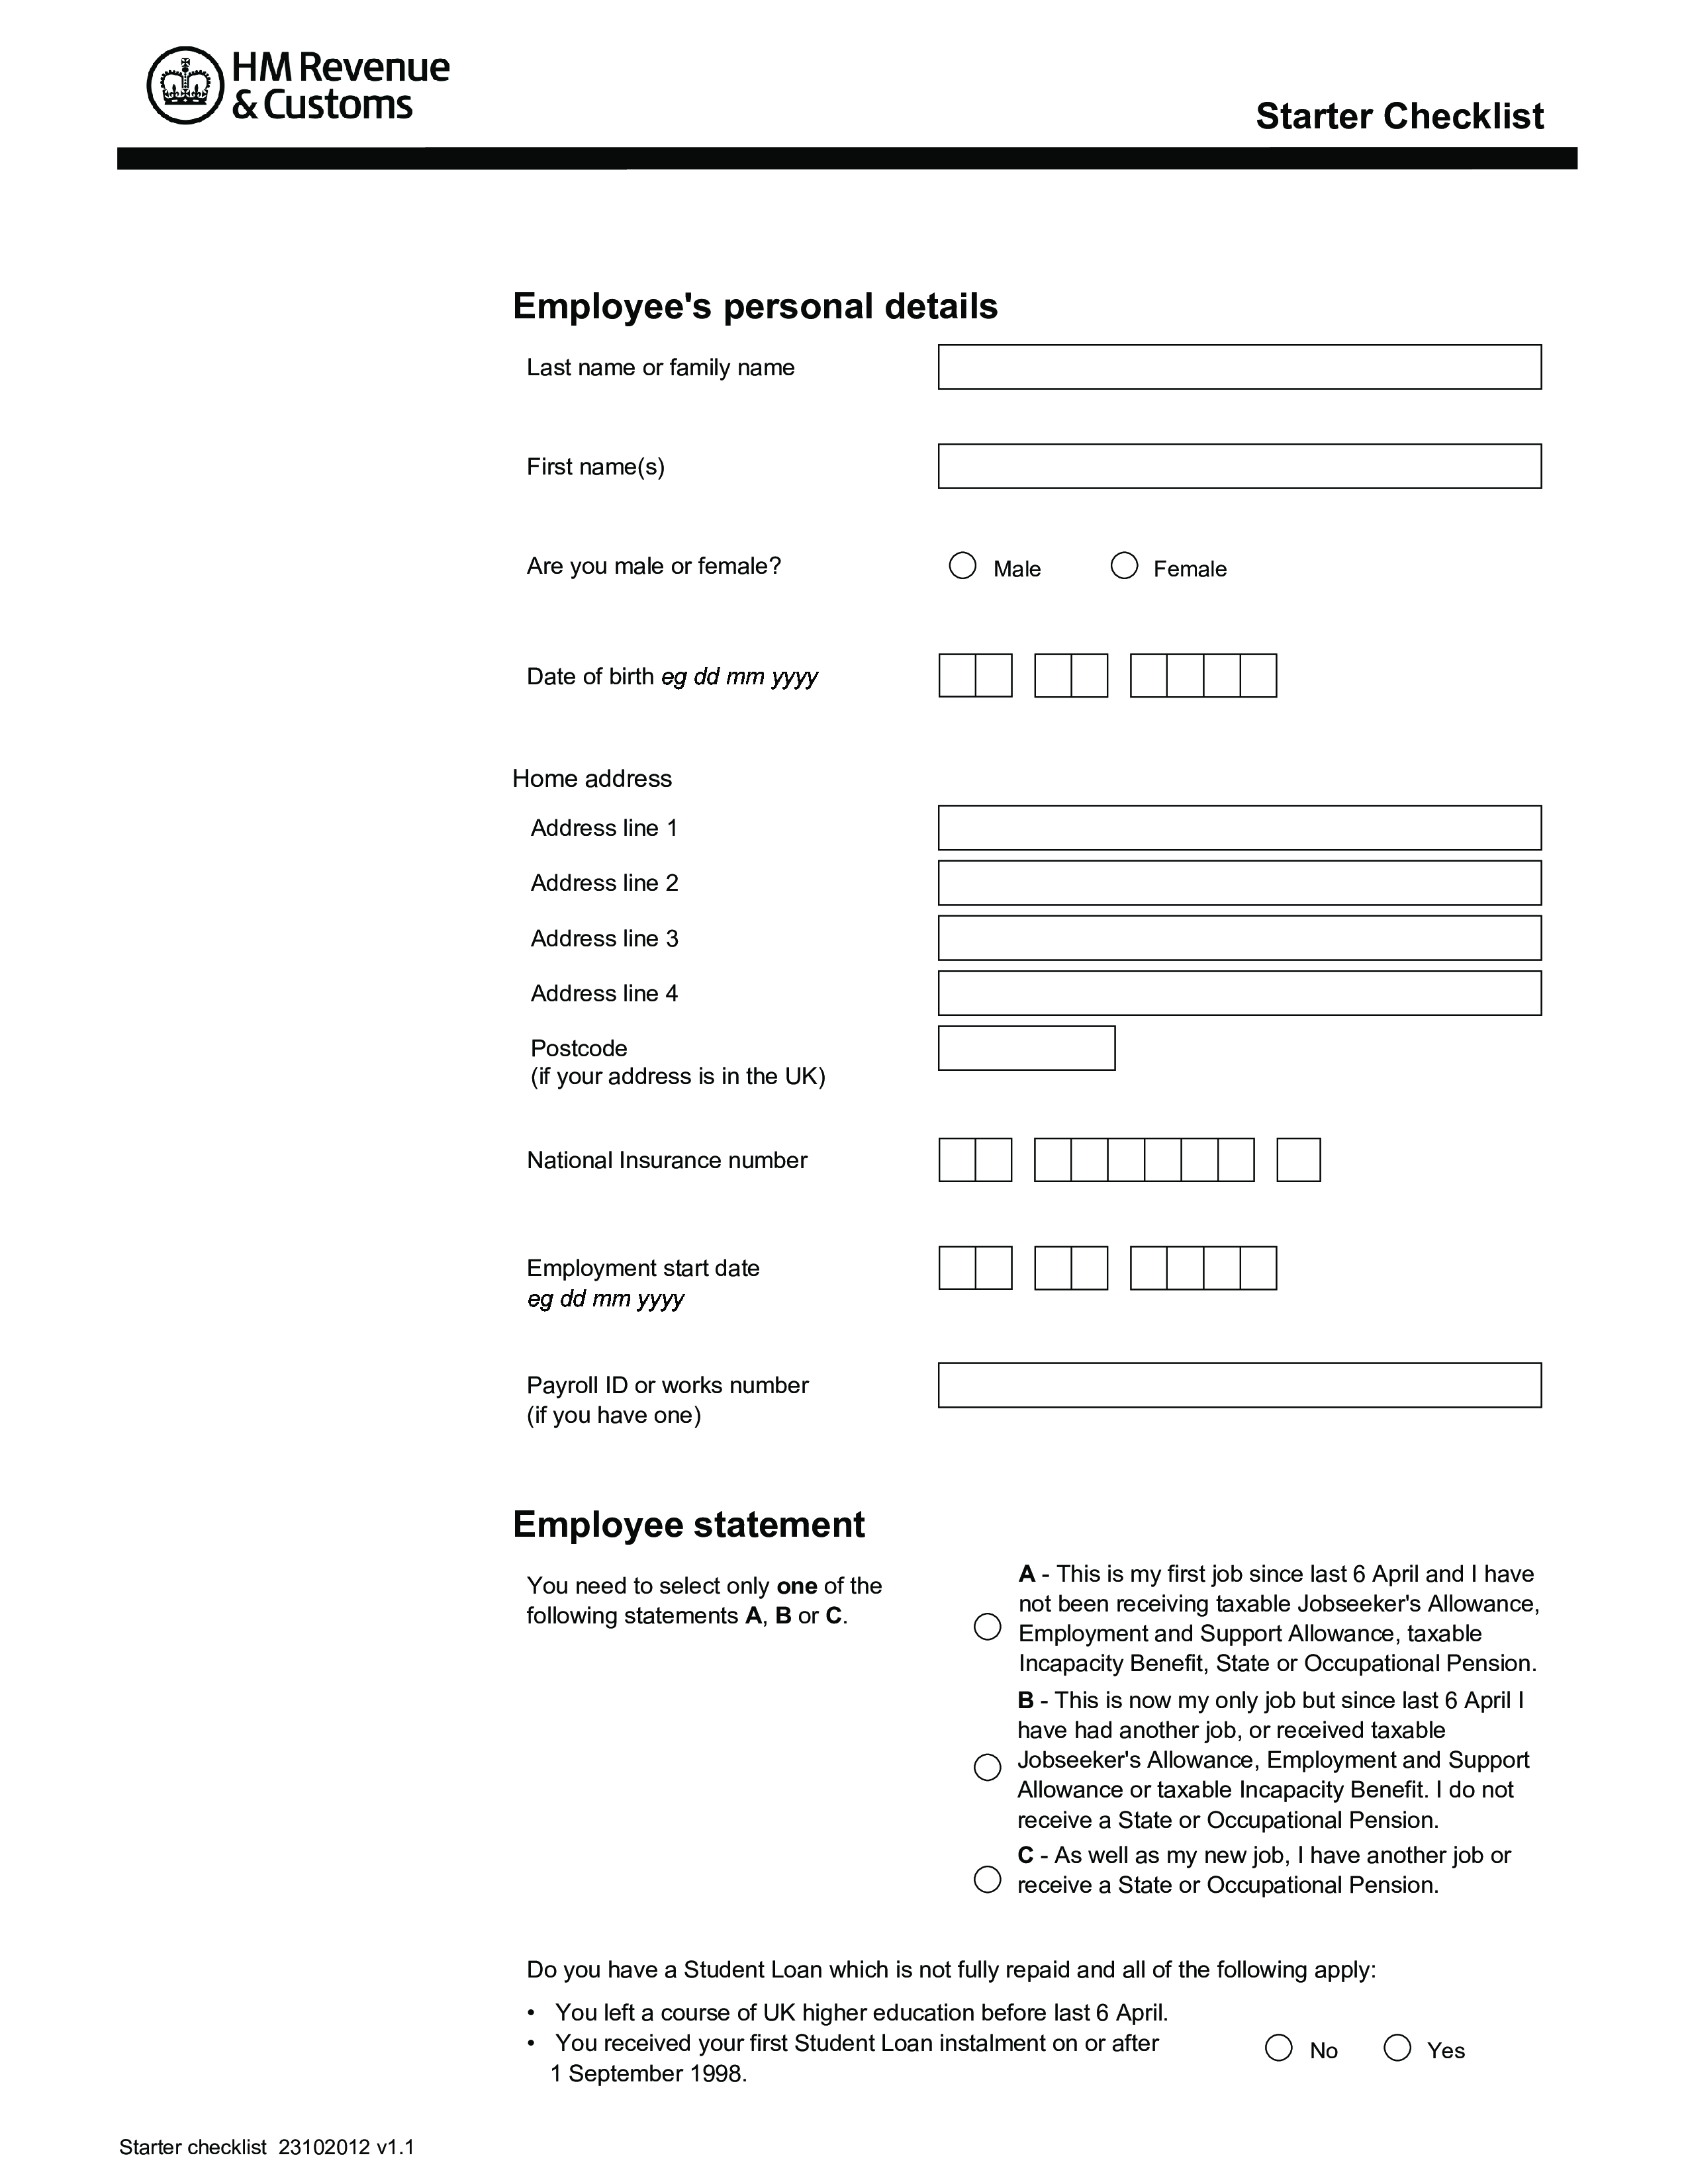 New Employee Starter Checklist Sample main image